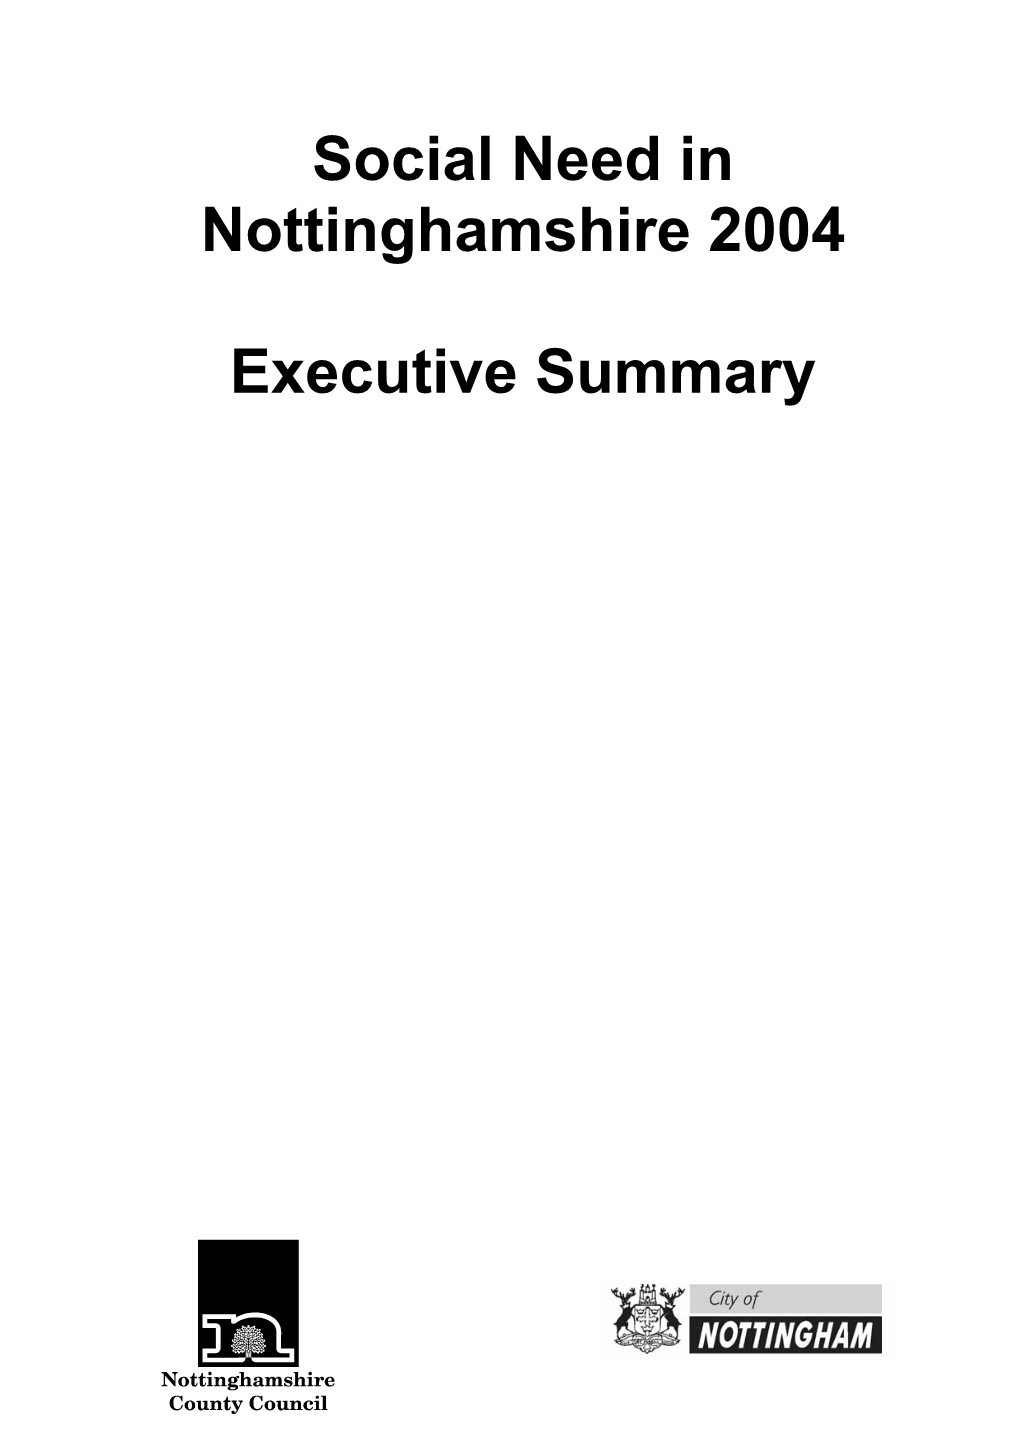 Social Need in Nottinghamshire 2004